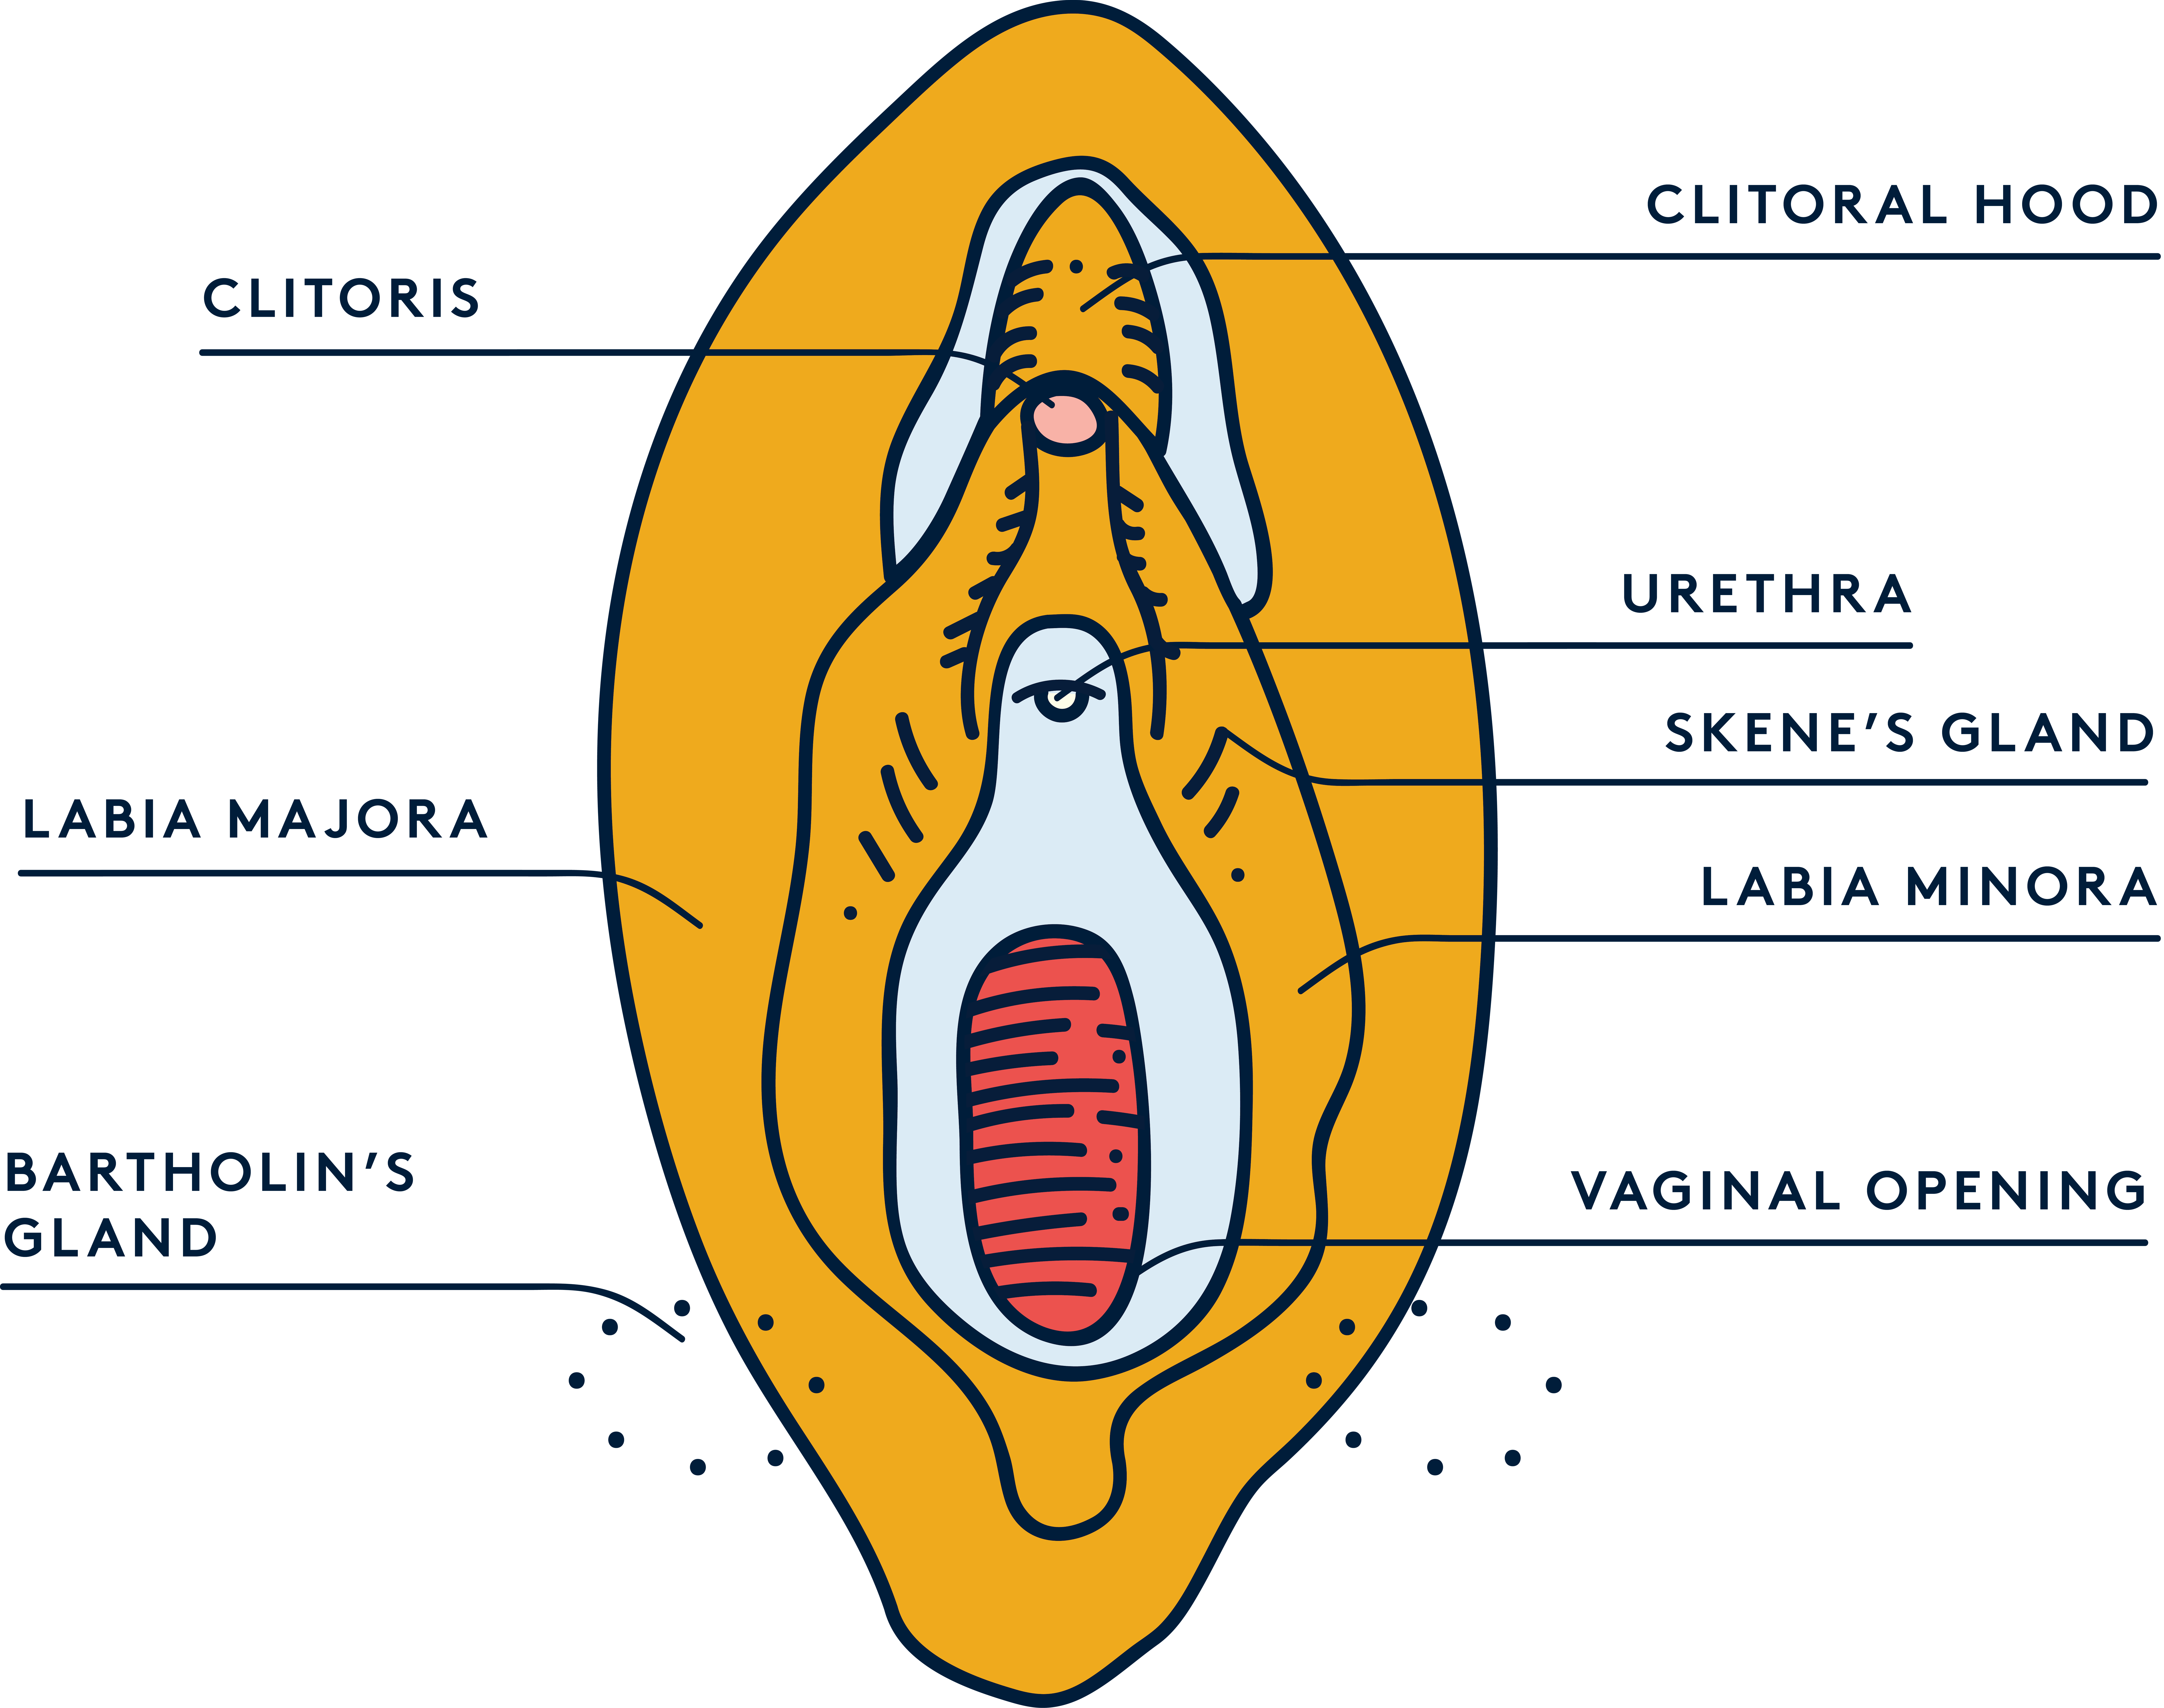 Vulva and clitoris 